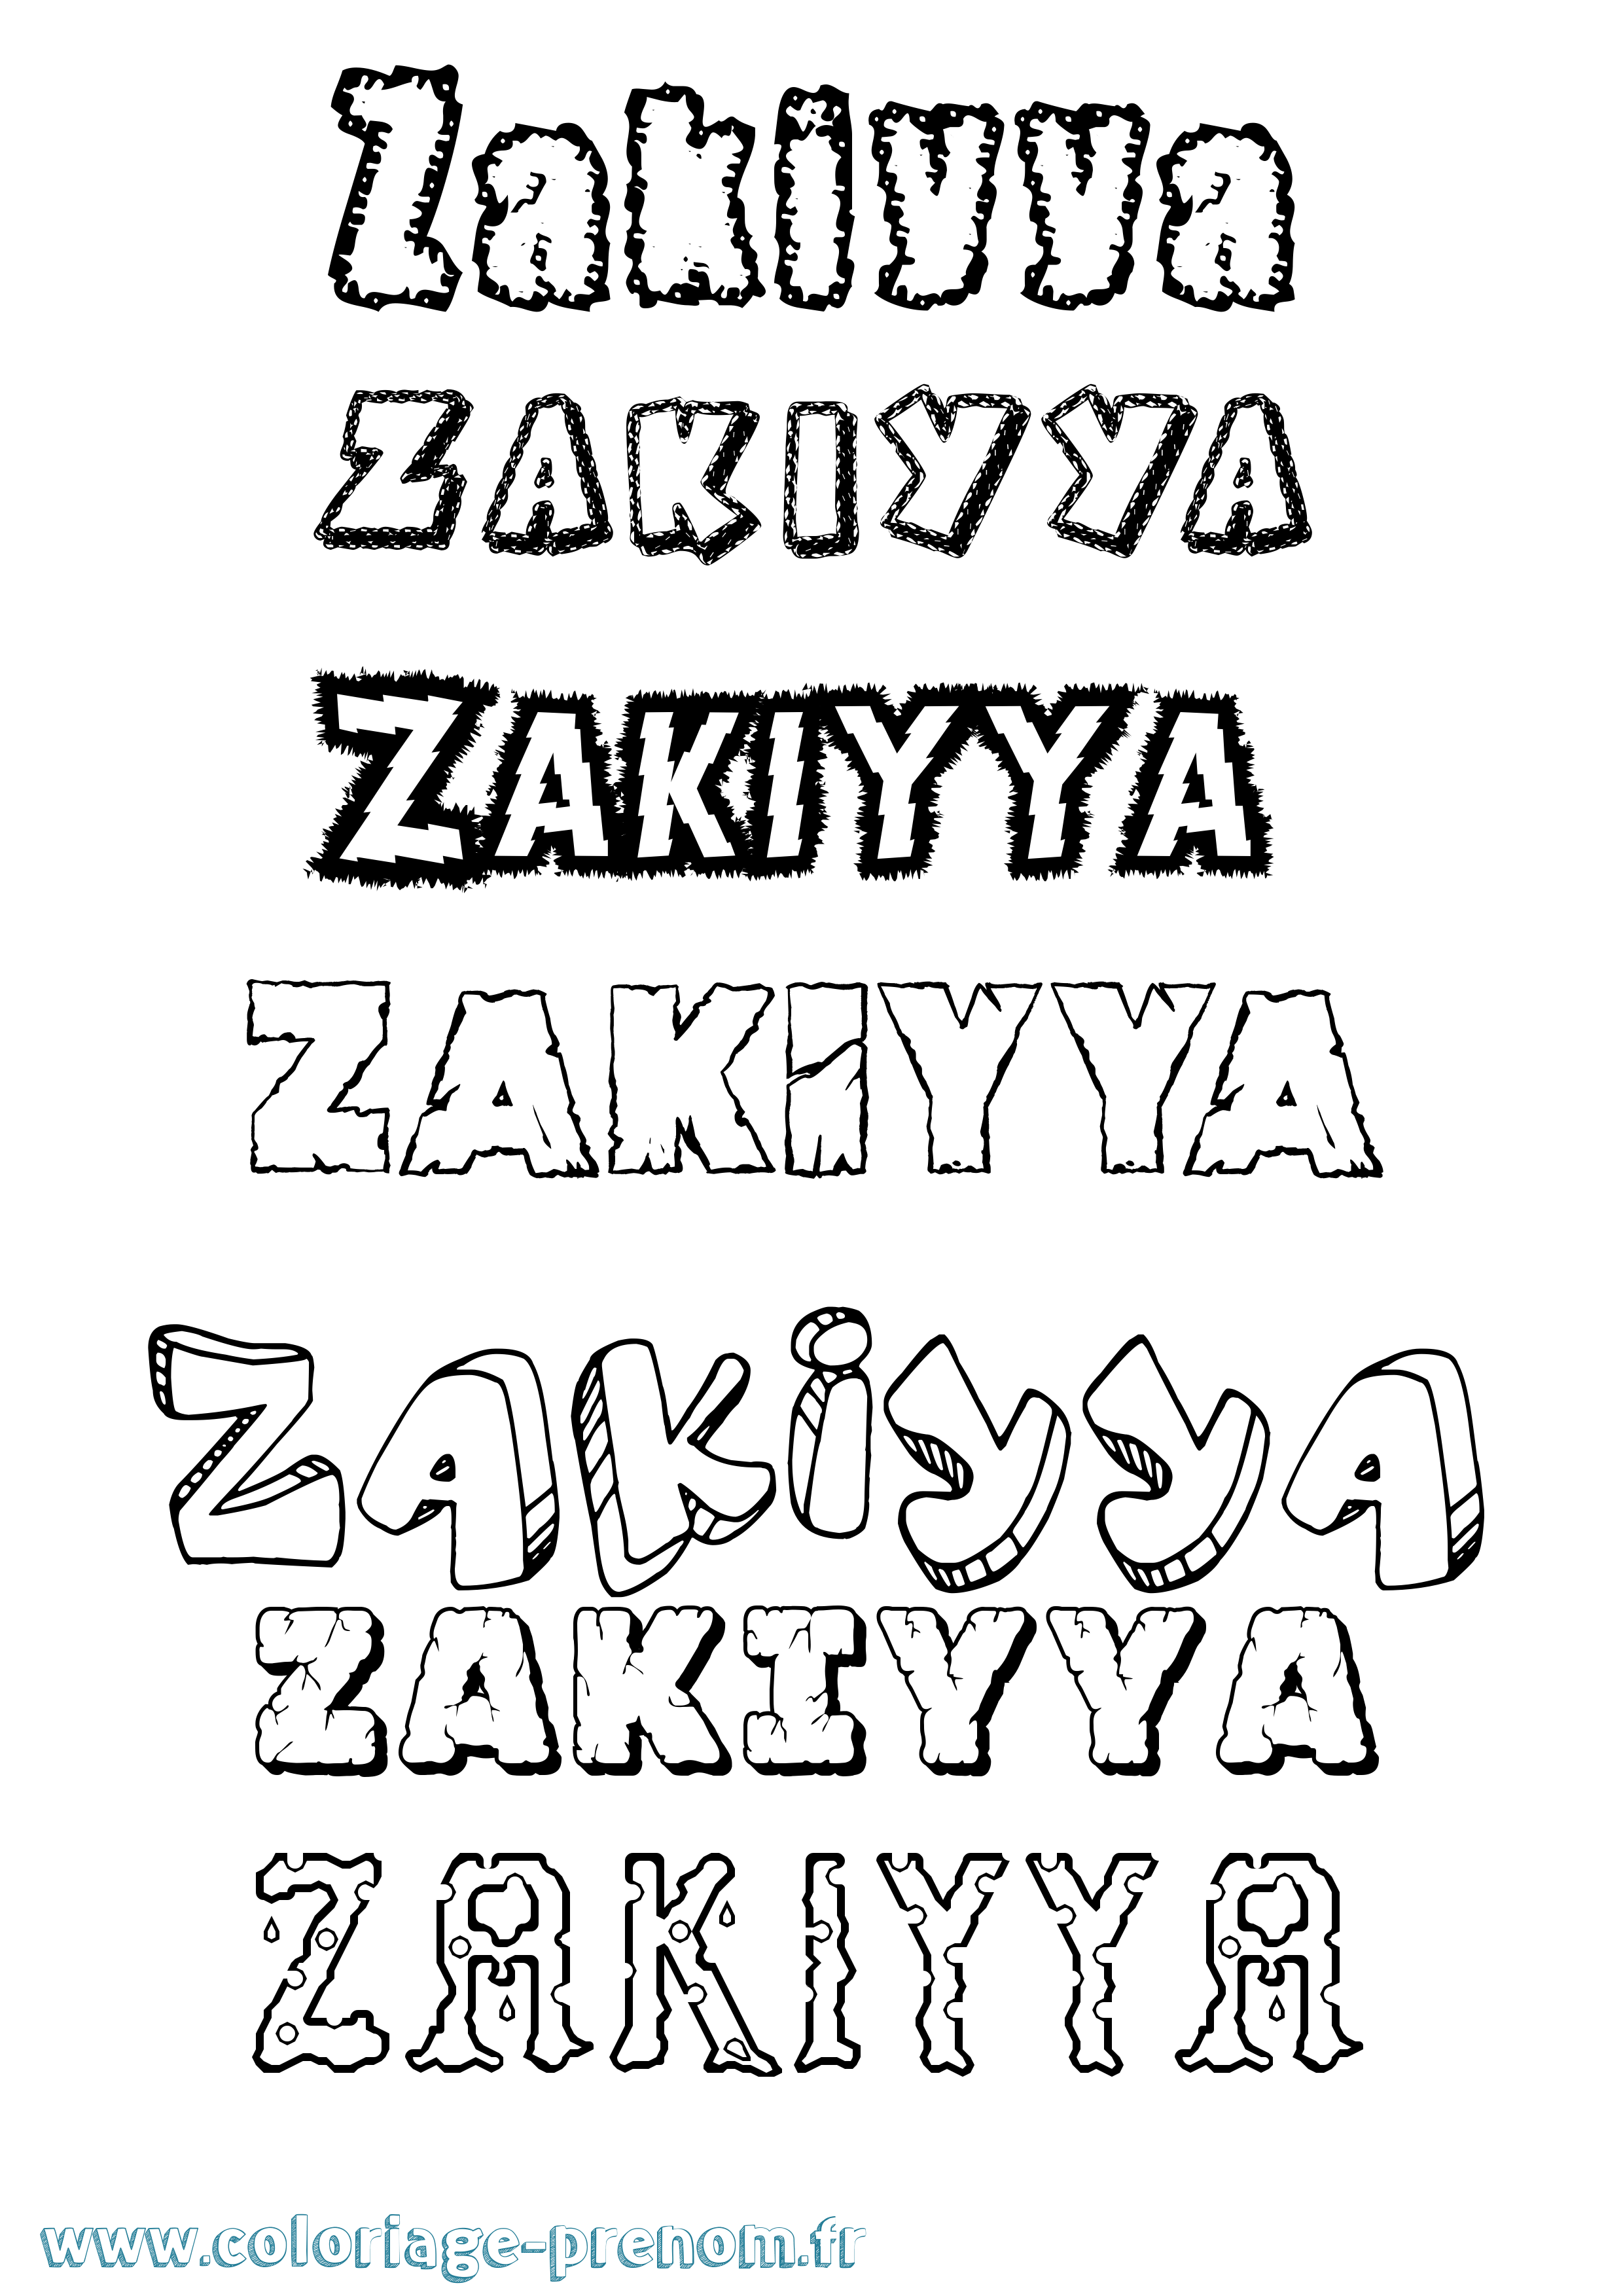 Coloriage prénom Zakiyya Destructuré